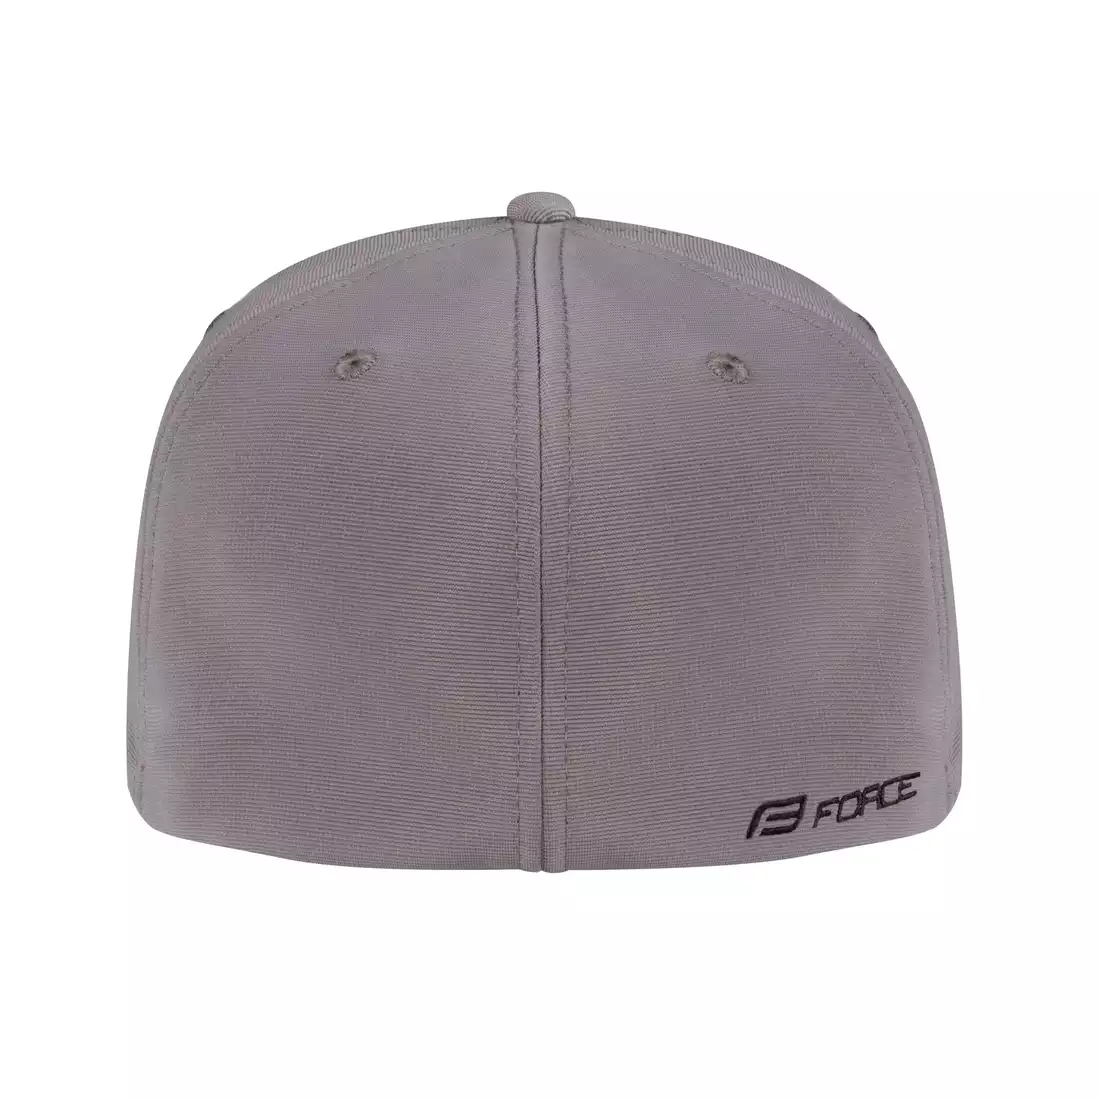 FORCE FBC cap, gray-black